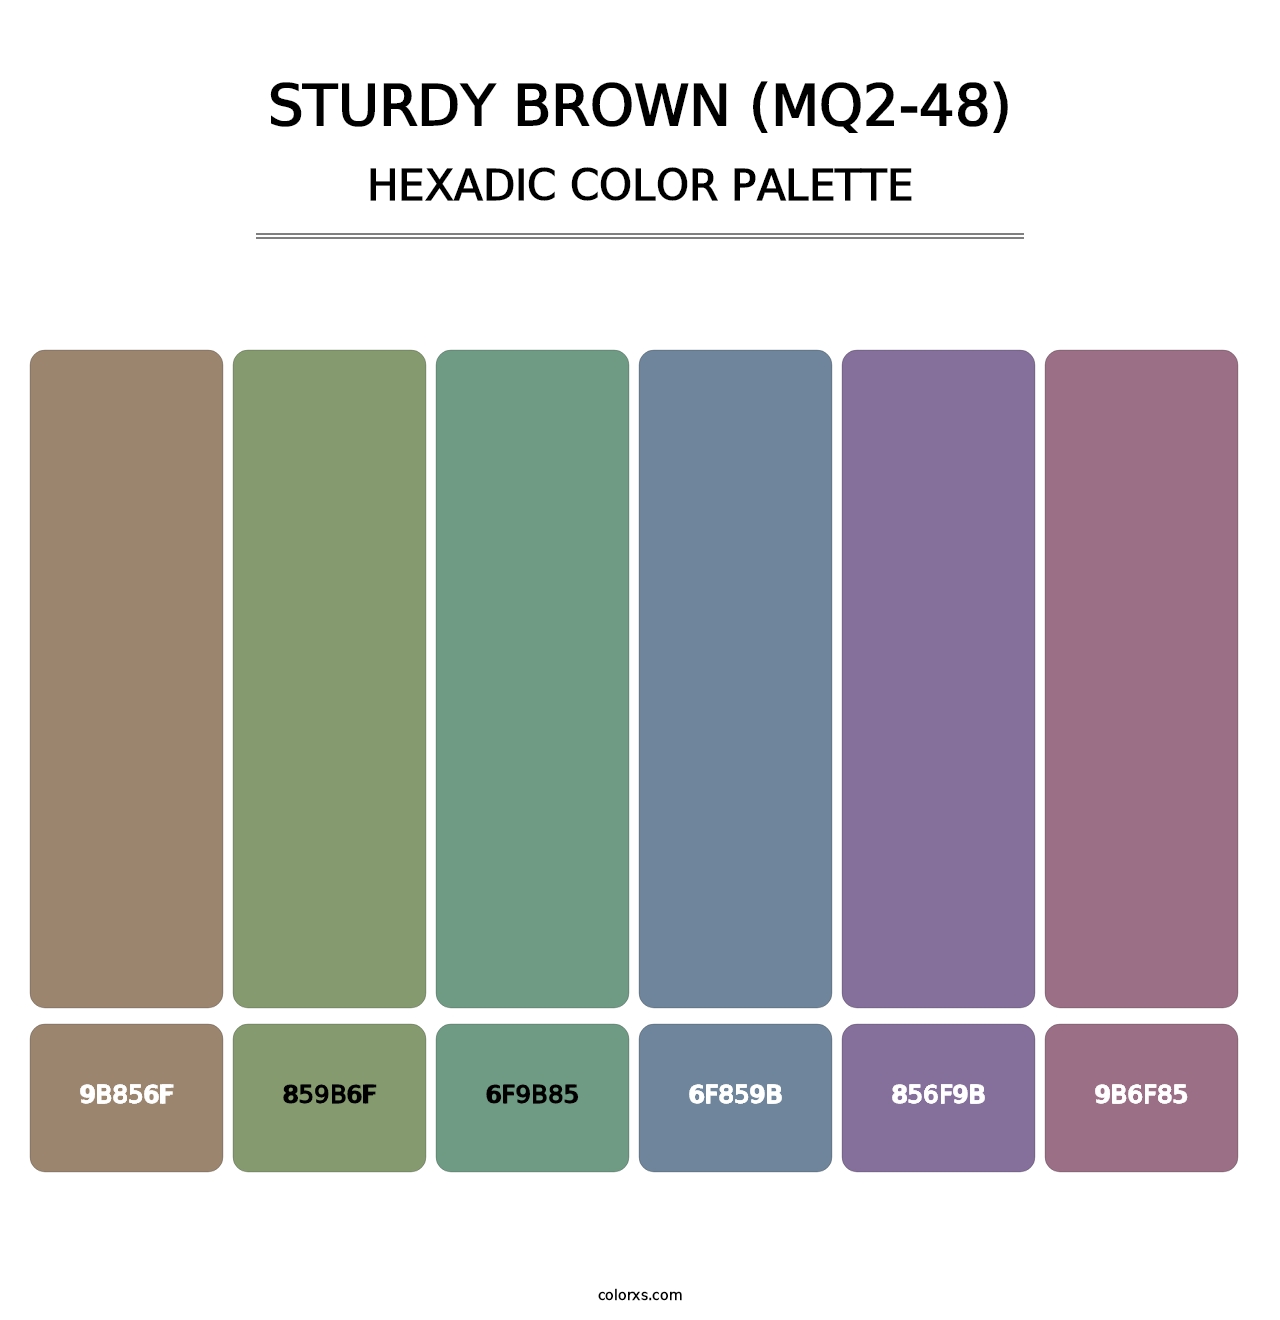 Sturdy Brown (MQ2-48) - Hexadic Color Palette